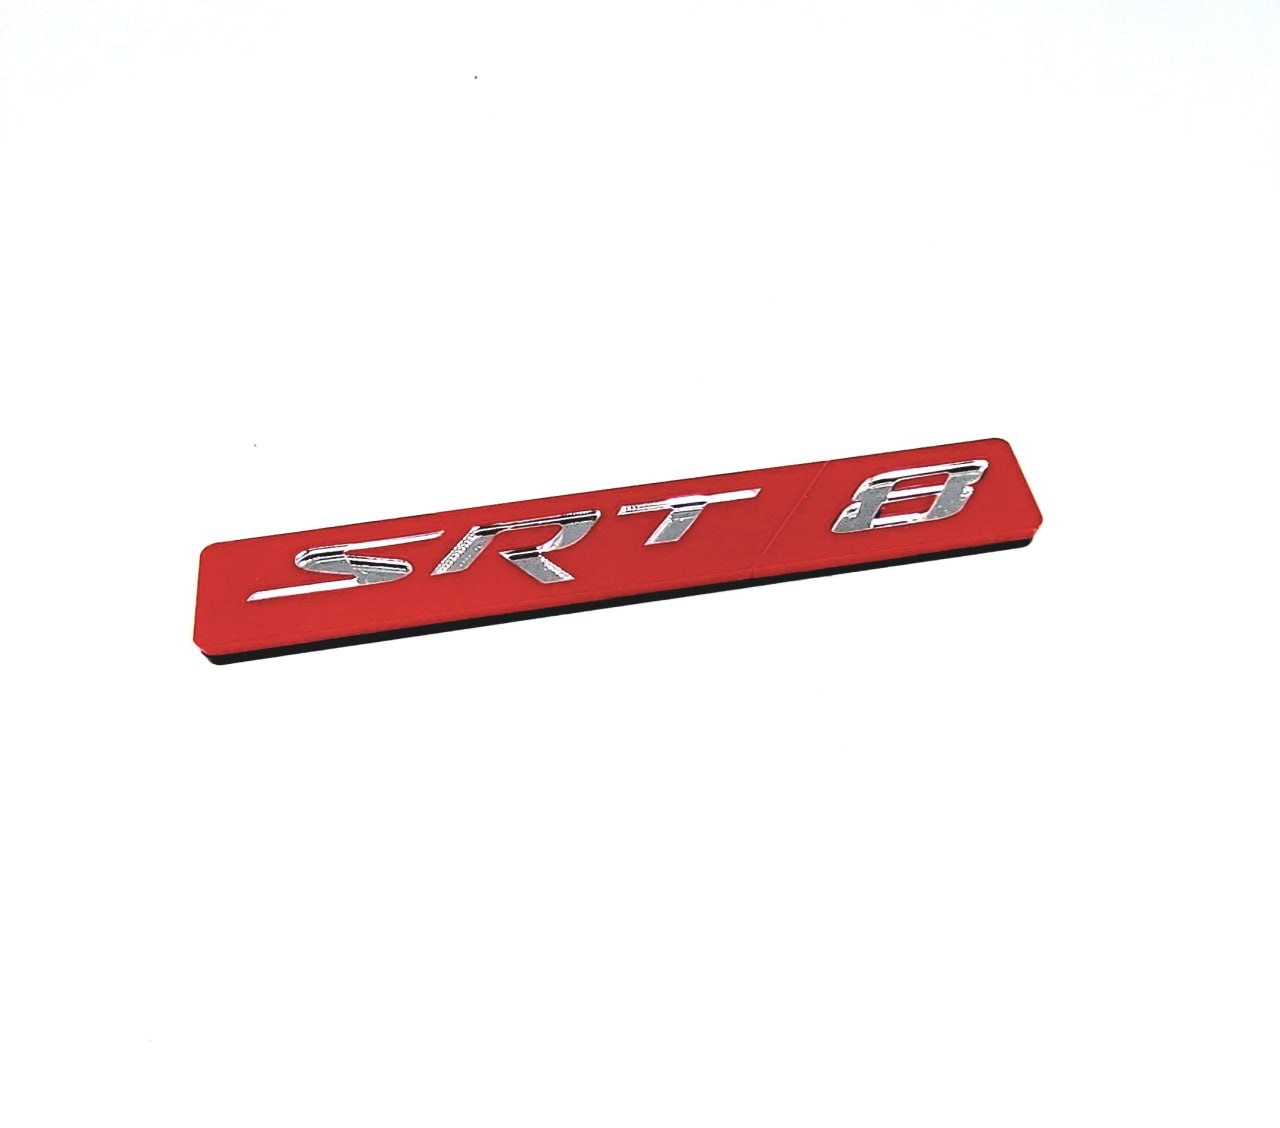 Chrysler Radiator grille emblem with SRT8 logo (Type 4)